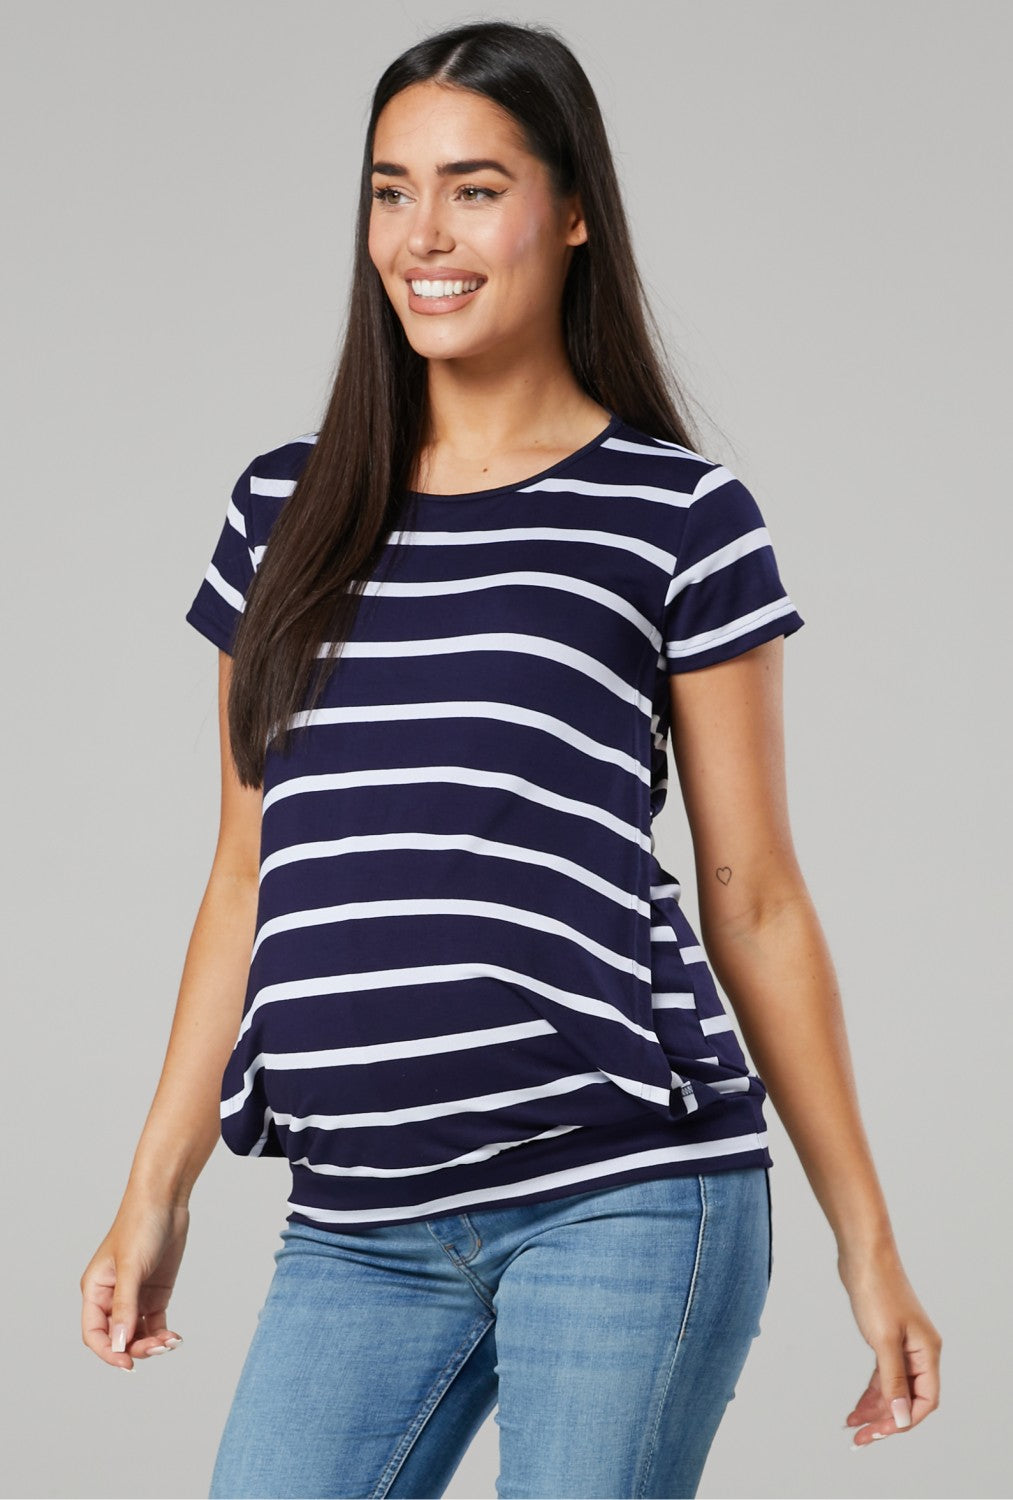 Maternity T-shirt Nursing Layered Top Short Sleeves